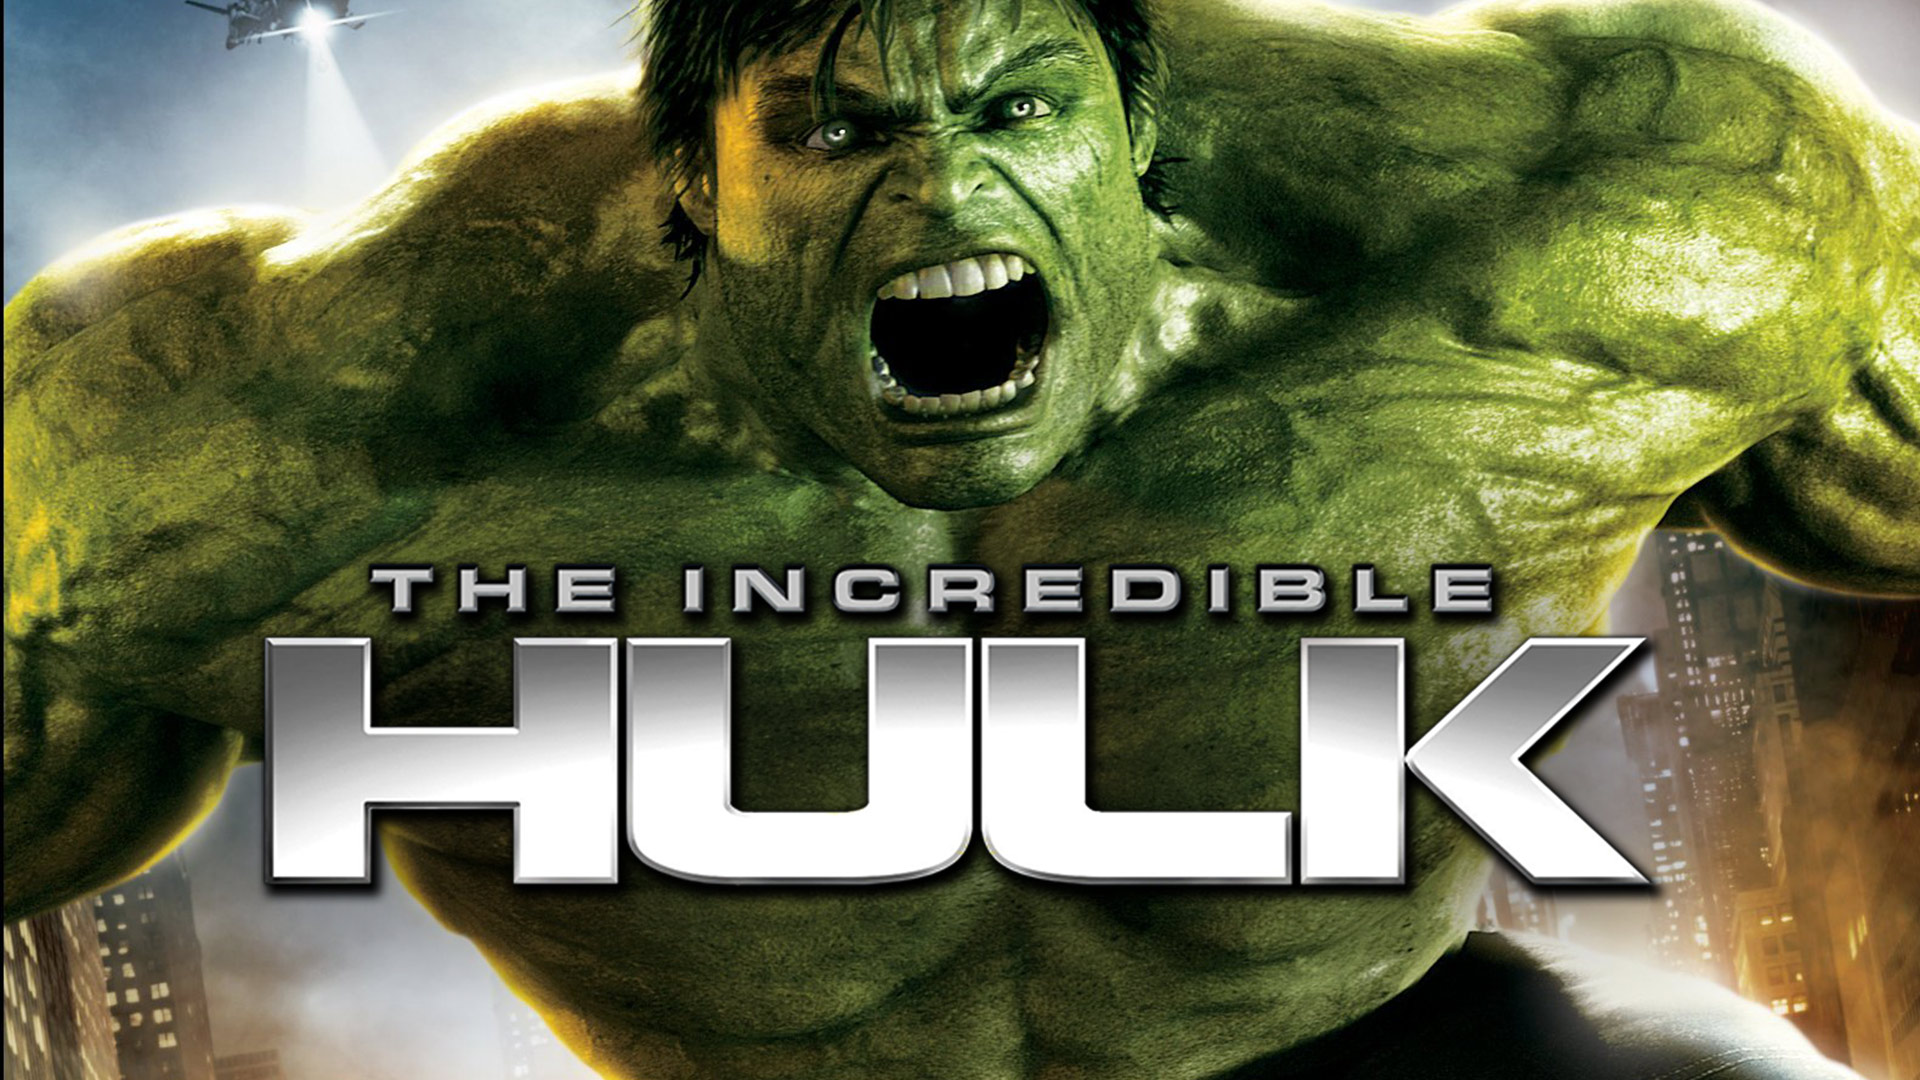 Download The Incredible Hulk (2008) Full Movie Free 480p, 720p and 1080p in {Hindi}.